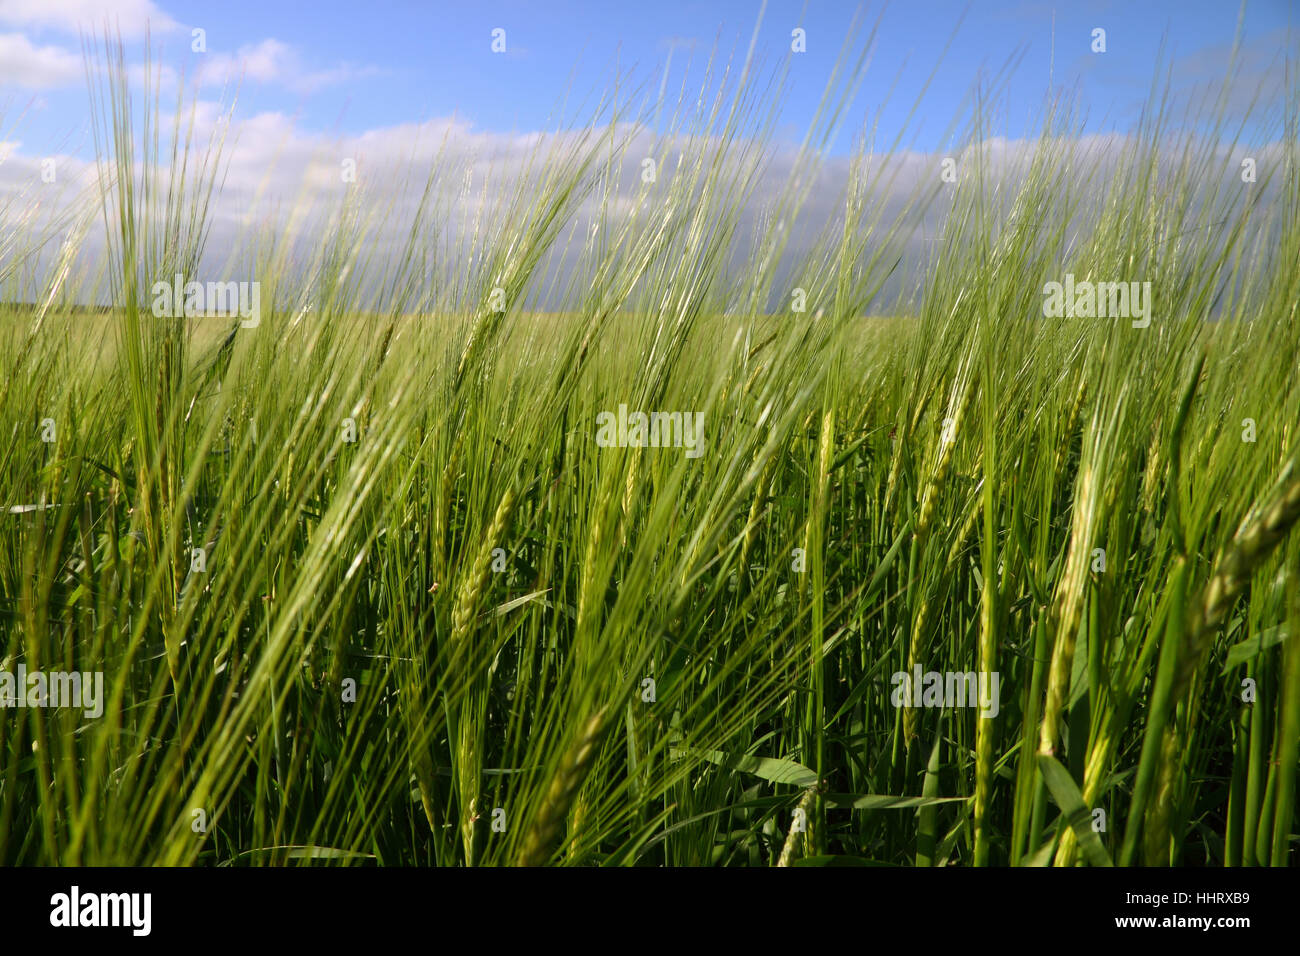 grain, corn field, barley, barley field, beard, firmament, sky, clouds, green, Stock Photo